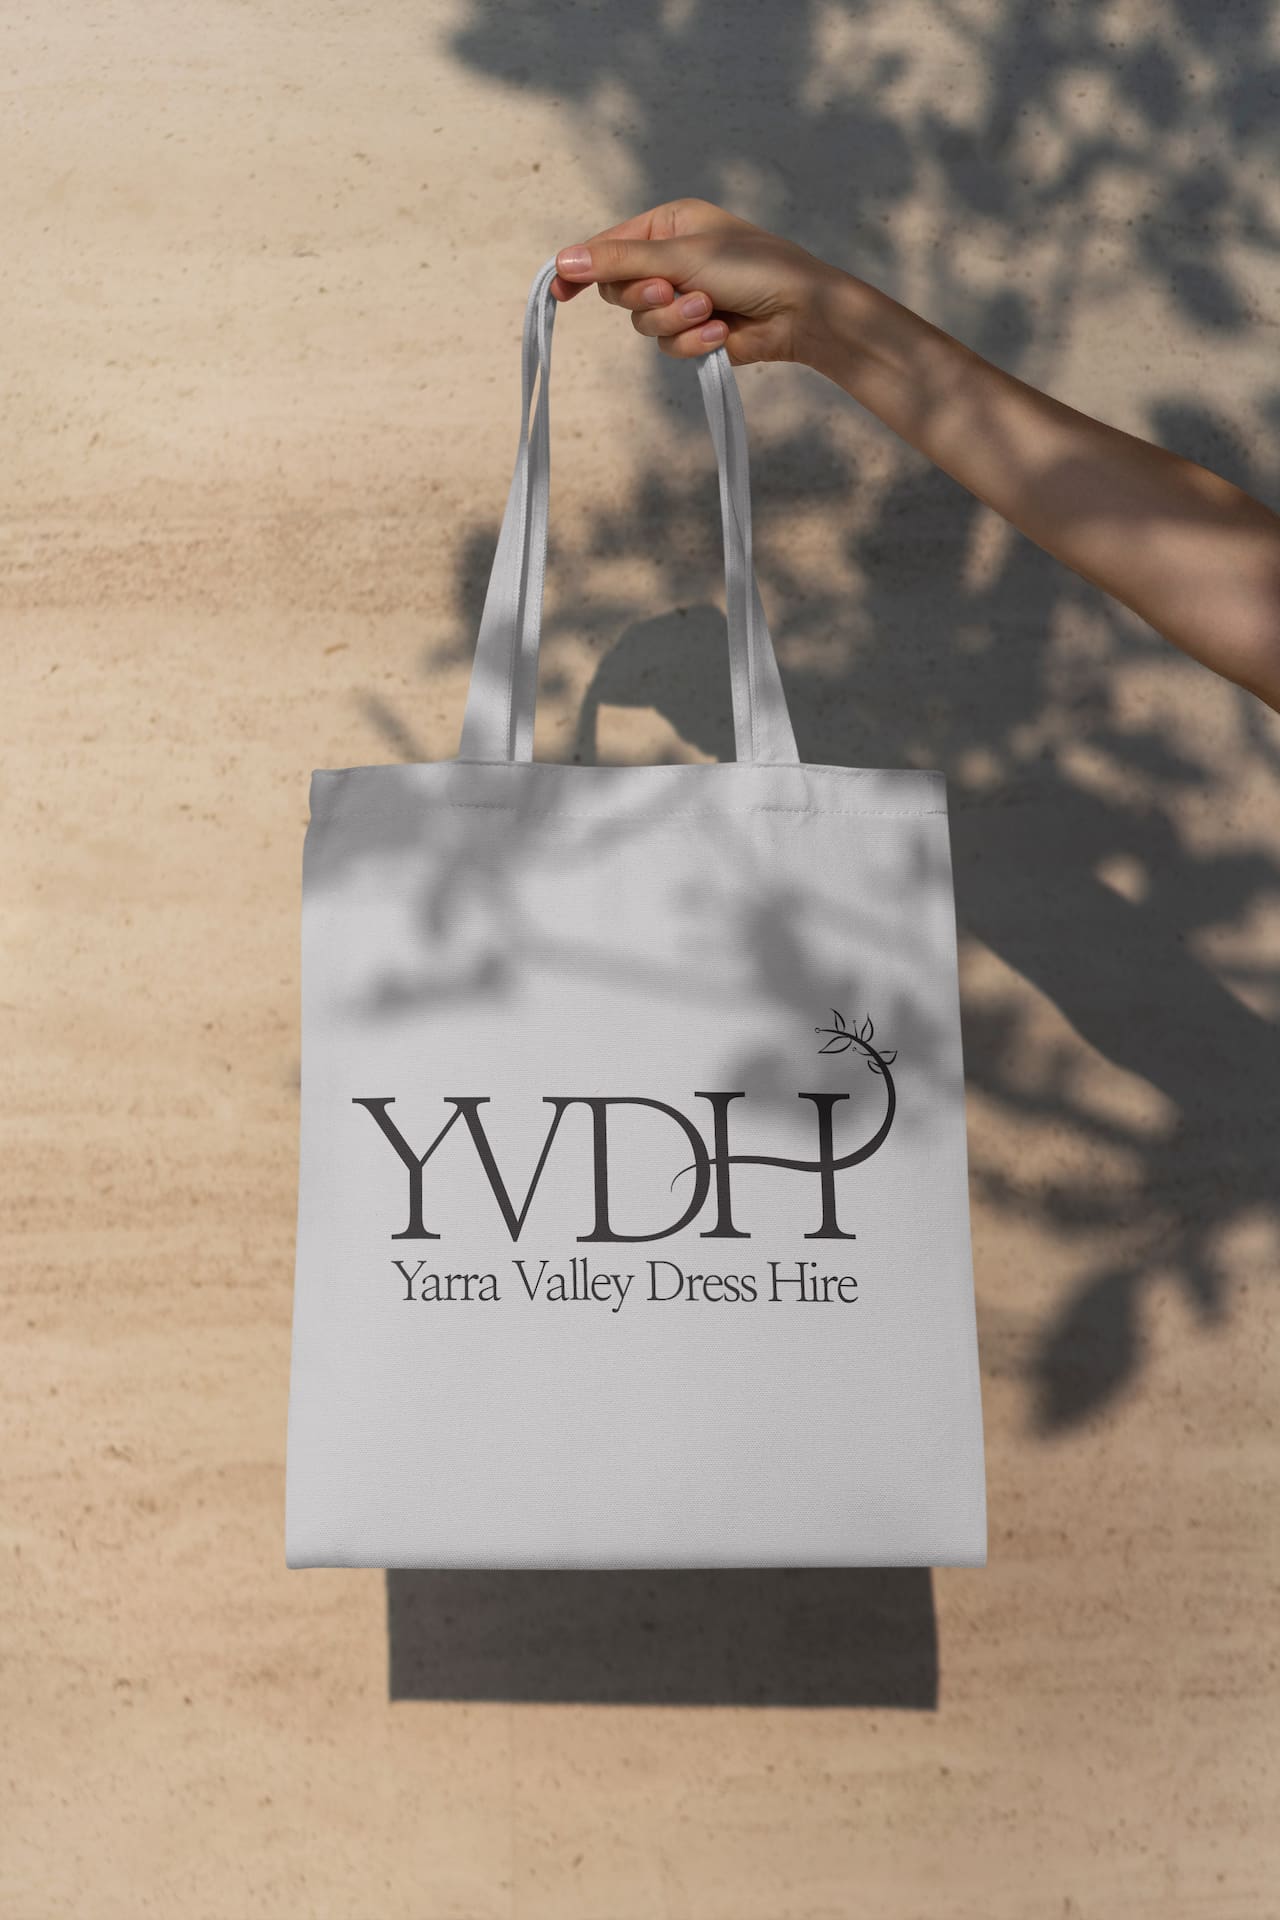 Yarra Valley Dress Hire Branding designed by Spacey Studios